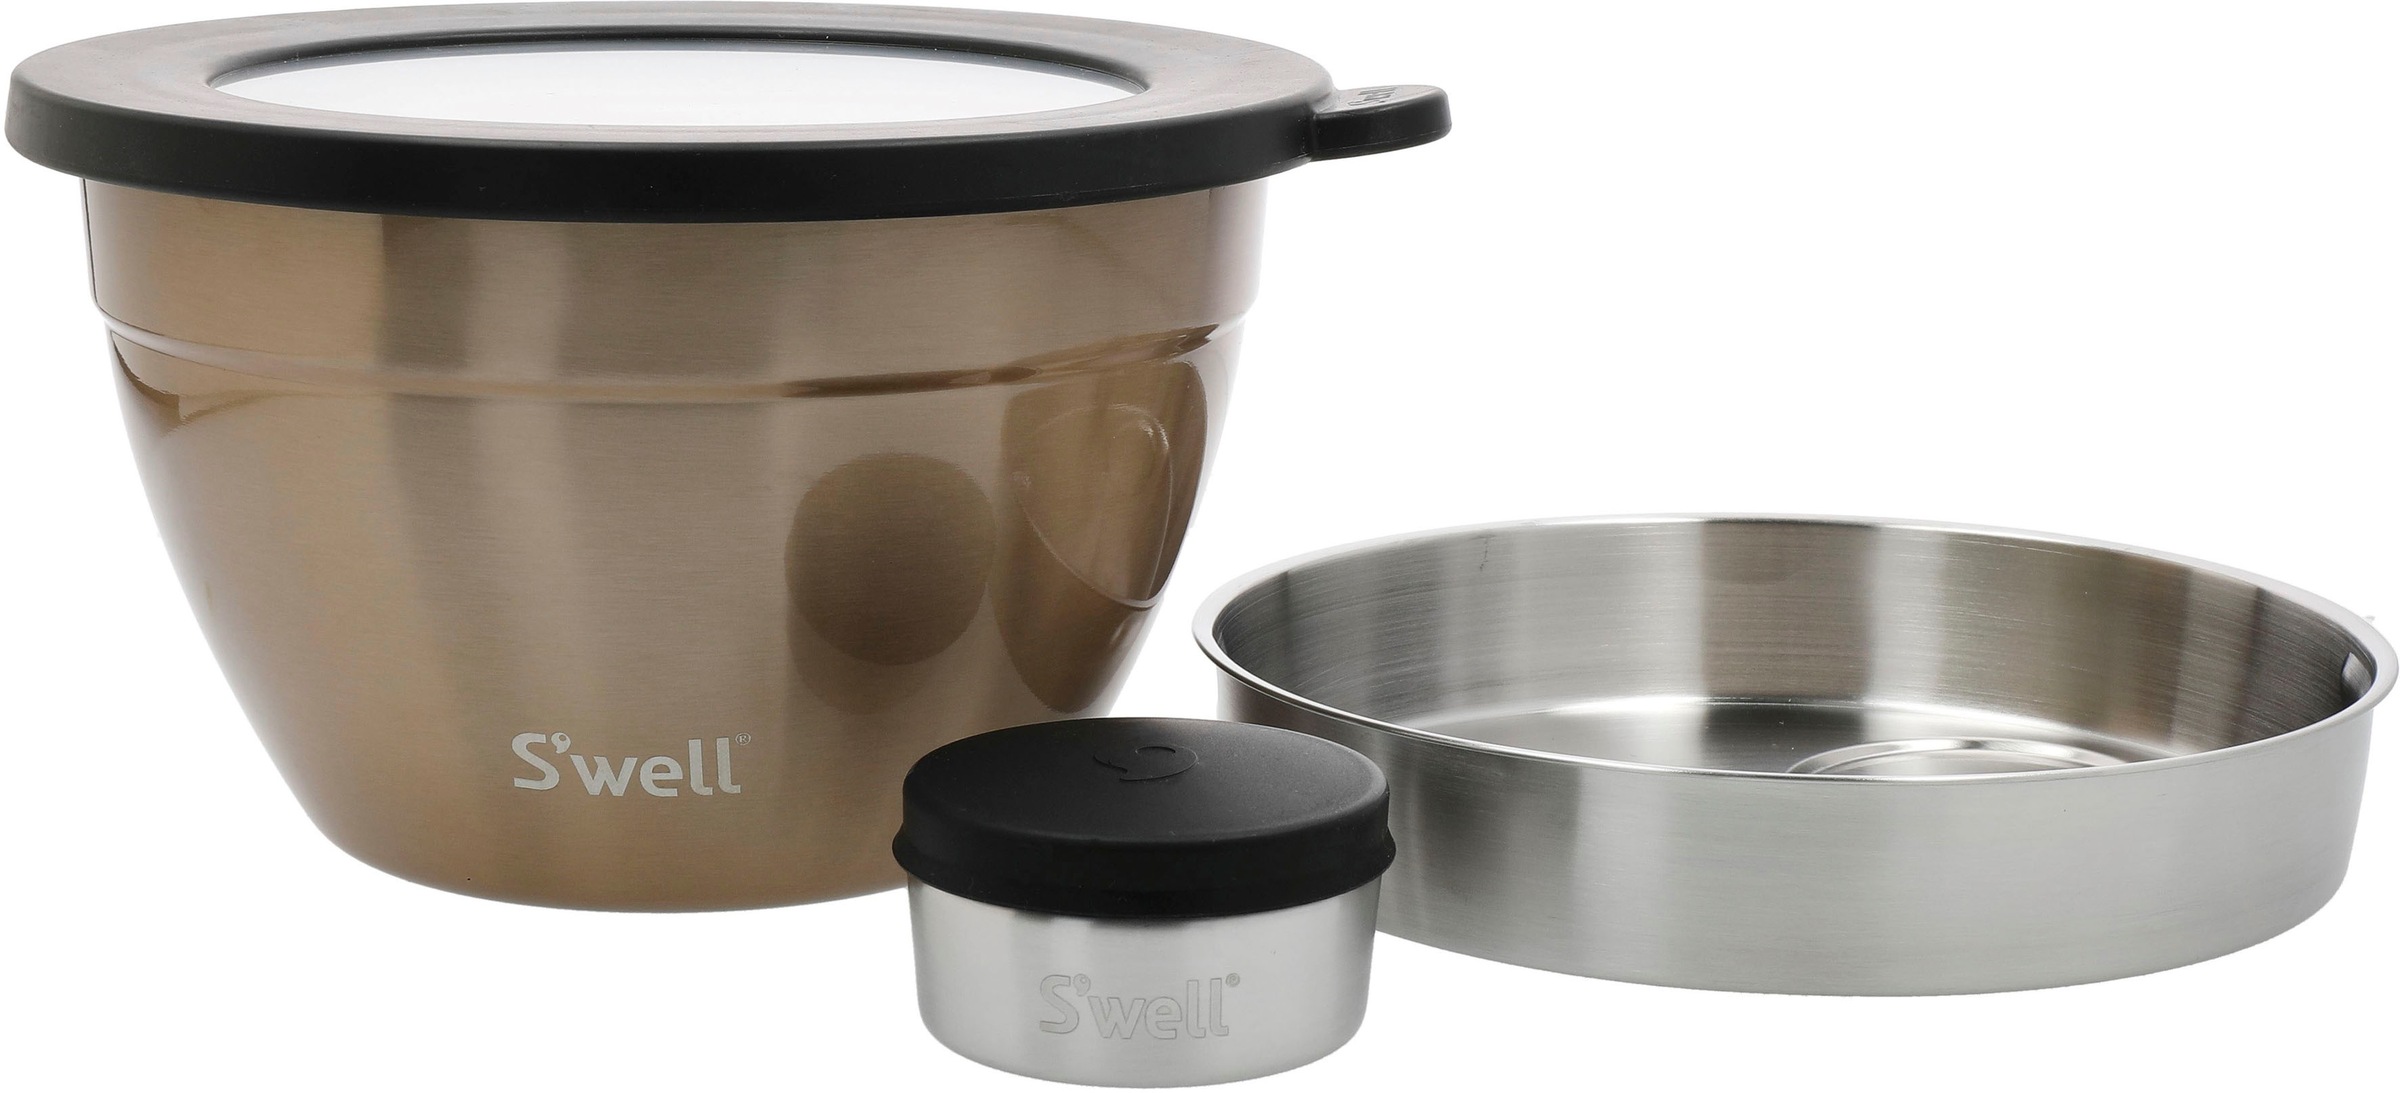 S'well Salatschüssel »S'well Calacatta Gold Salad Bowl Kit, 1.9L«, 3 tlg., günstig online kaufen